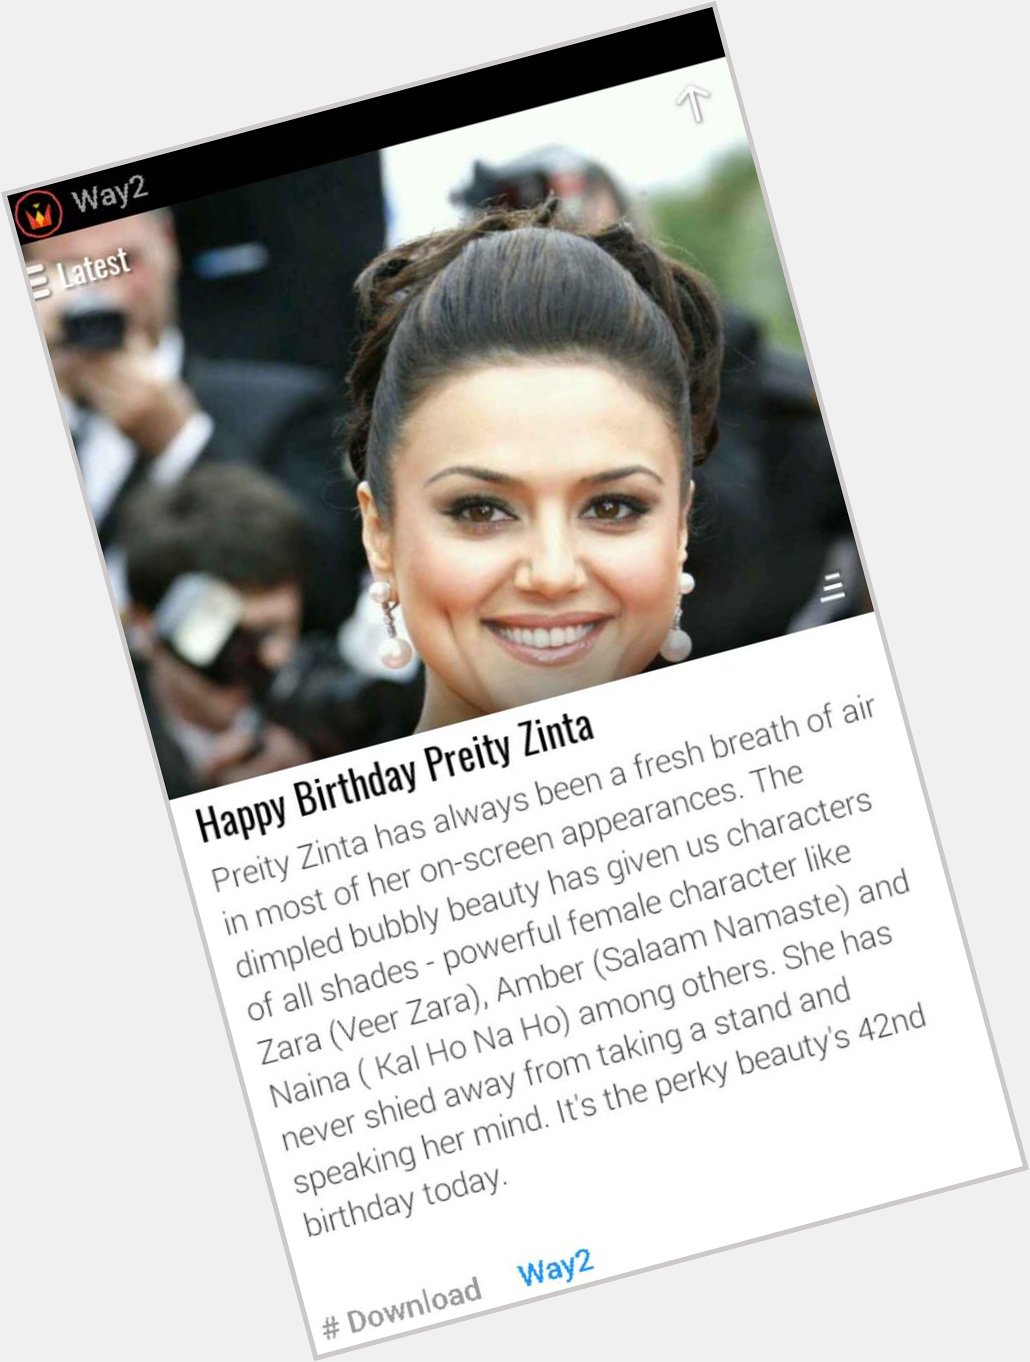 Happy Birthday Preity Zinta
Download Way2.
 